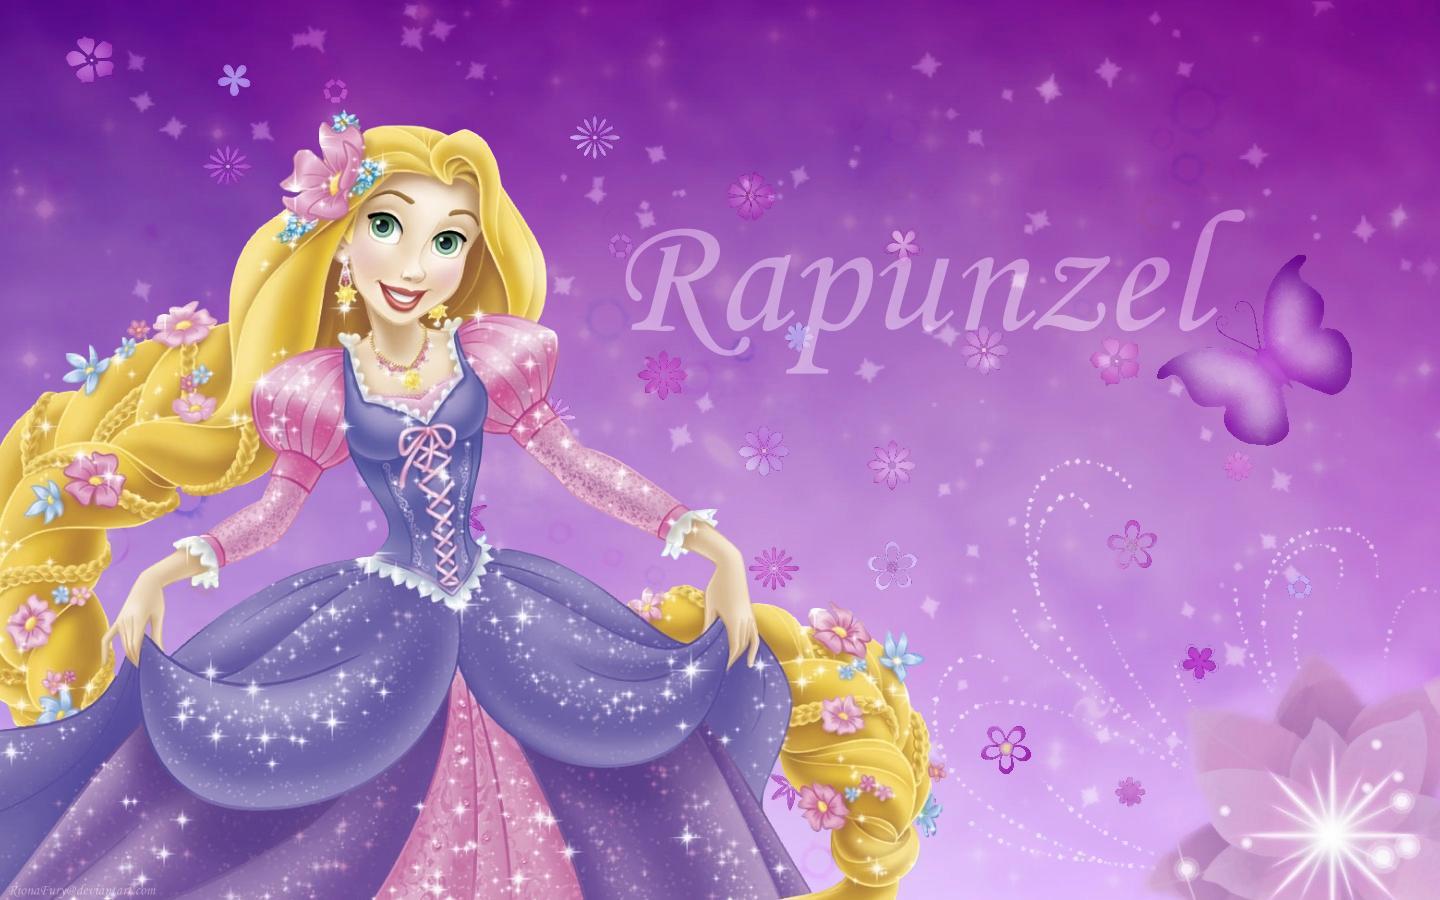 Disney Princess Rapunzel Background Wallpaper 07837